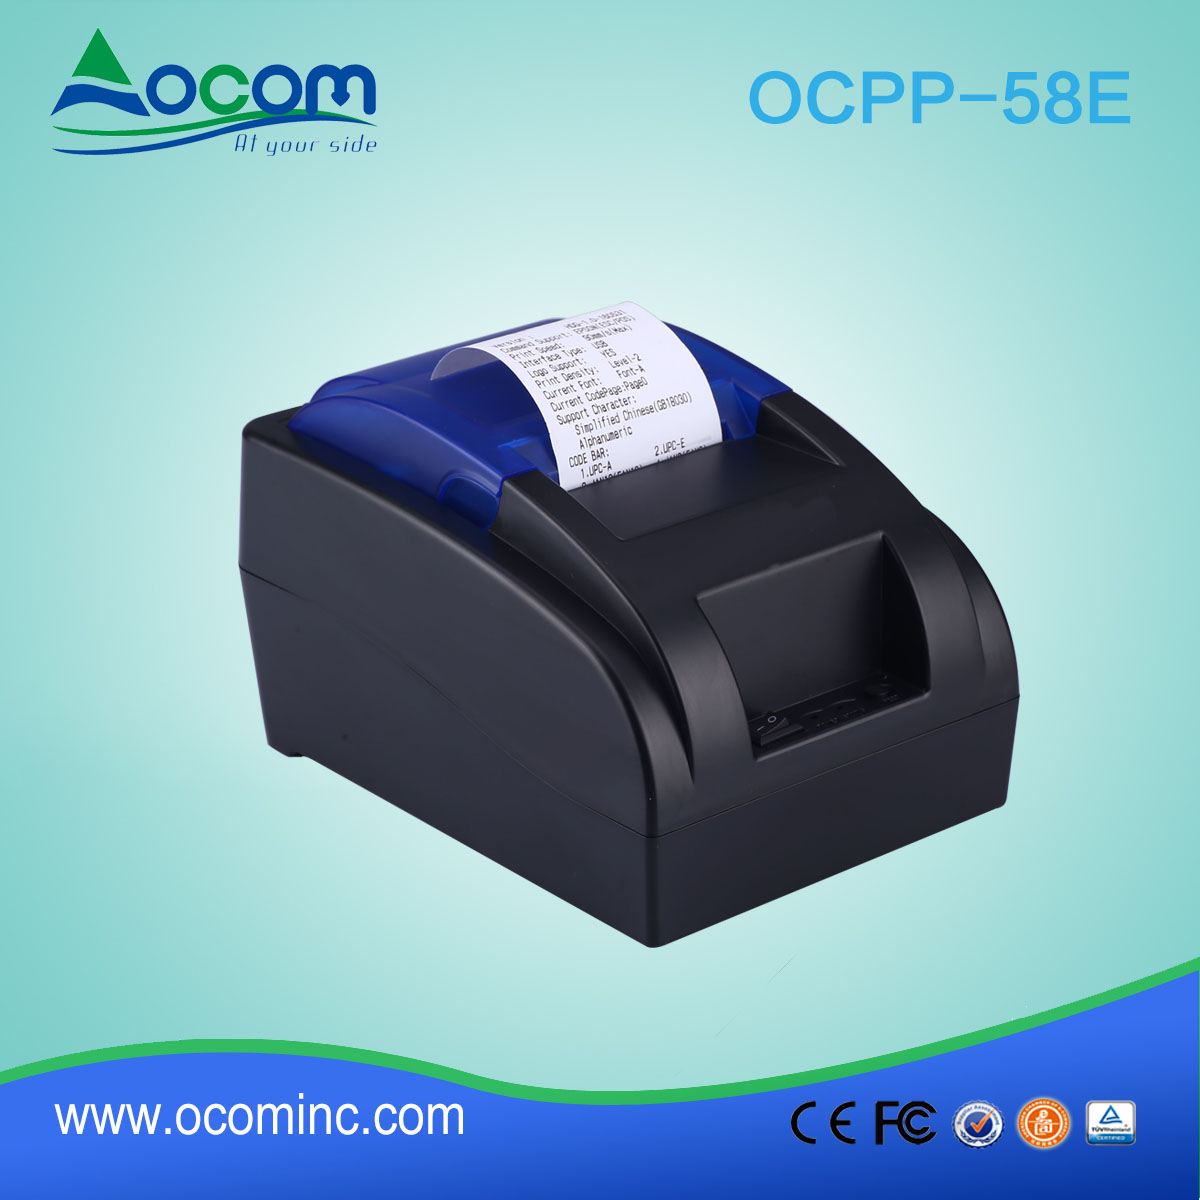 OCPP-58E 58毫米热敏票据打印机